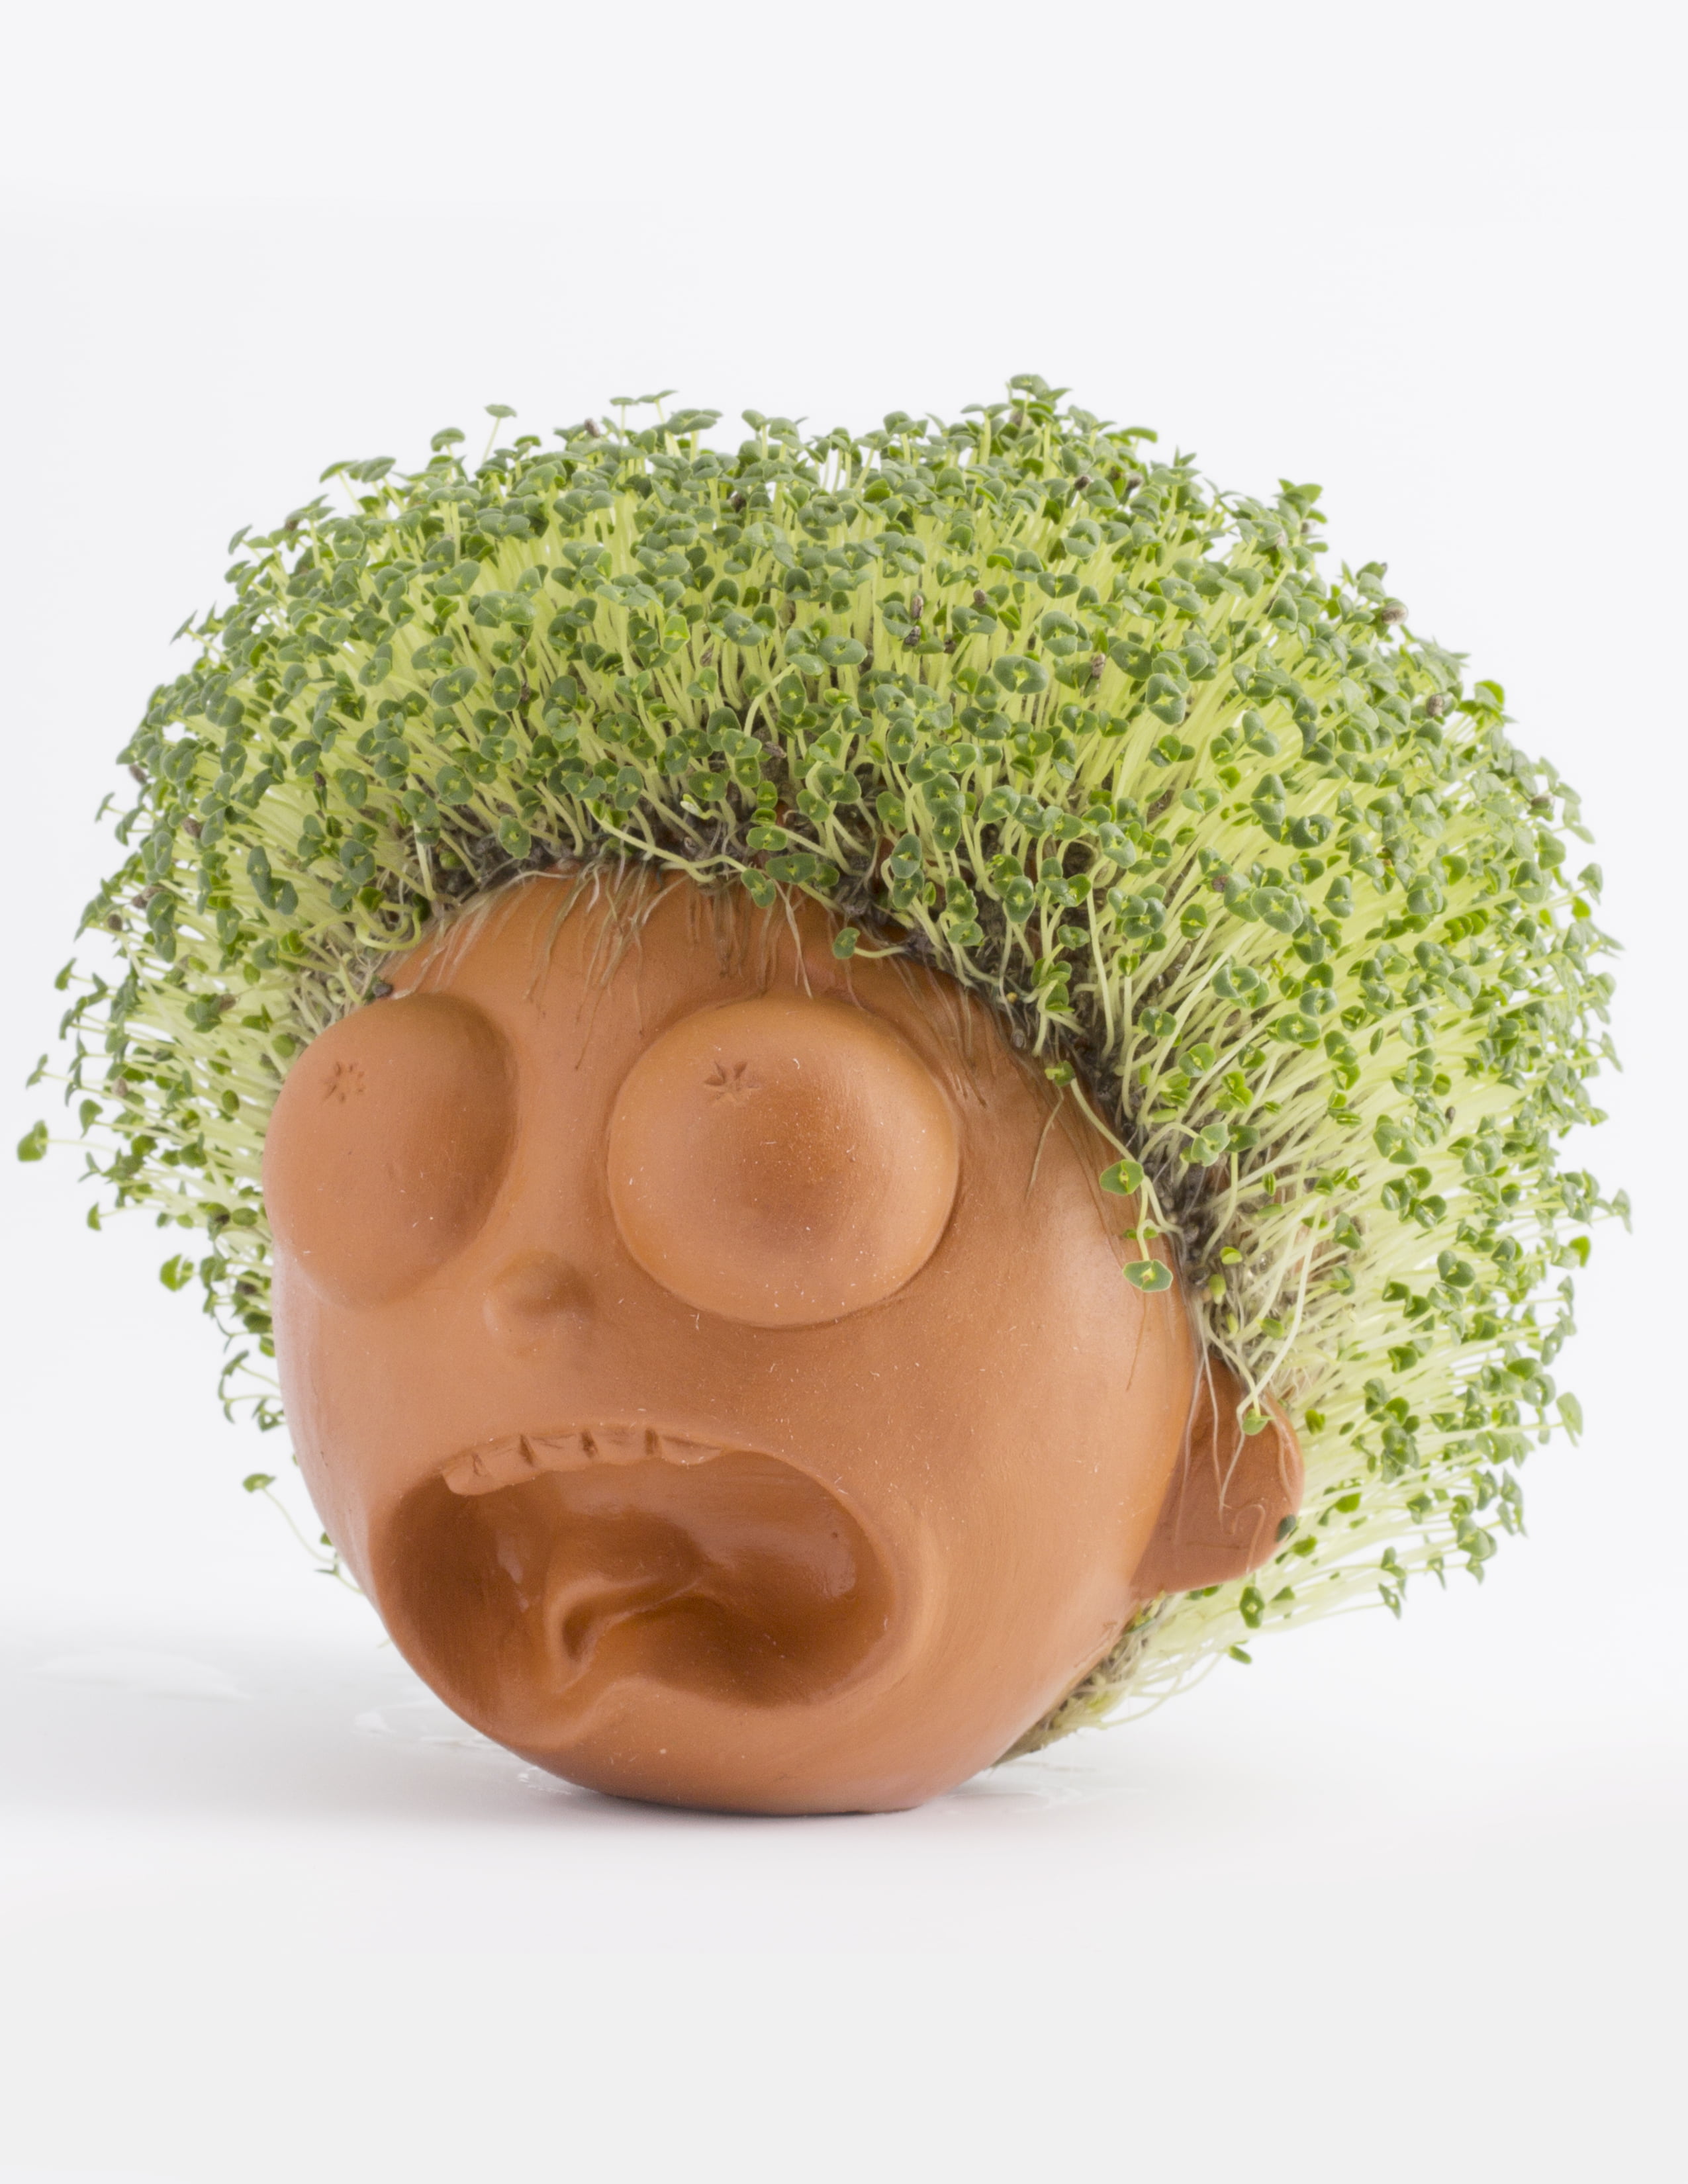 Chia Pet Morty (Rick Morty) - Decorative Pot Easy to Do Fun to Grow Chia Seeds - Walmart.com